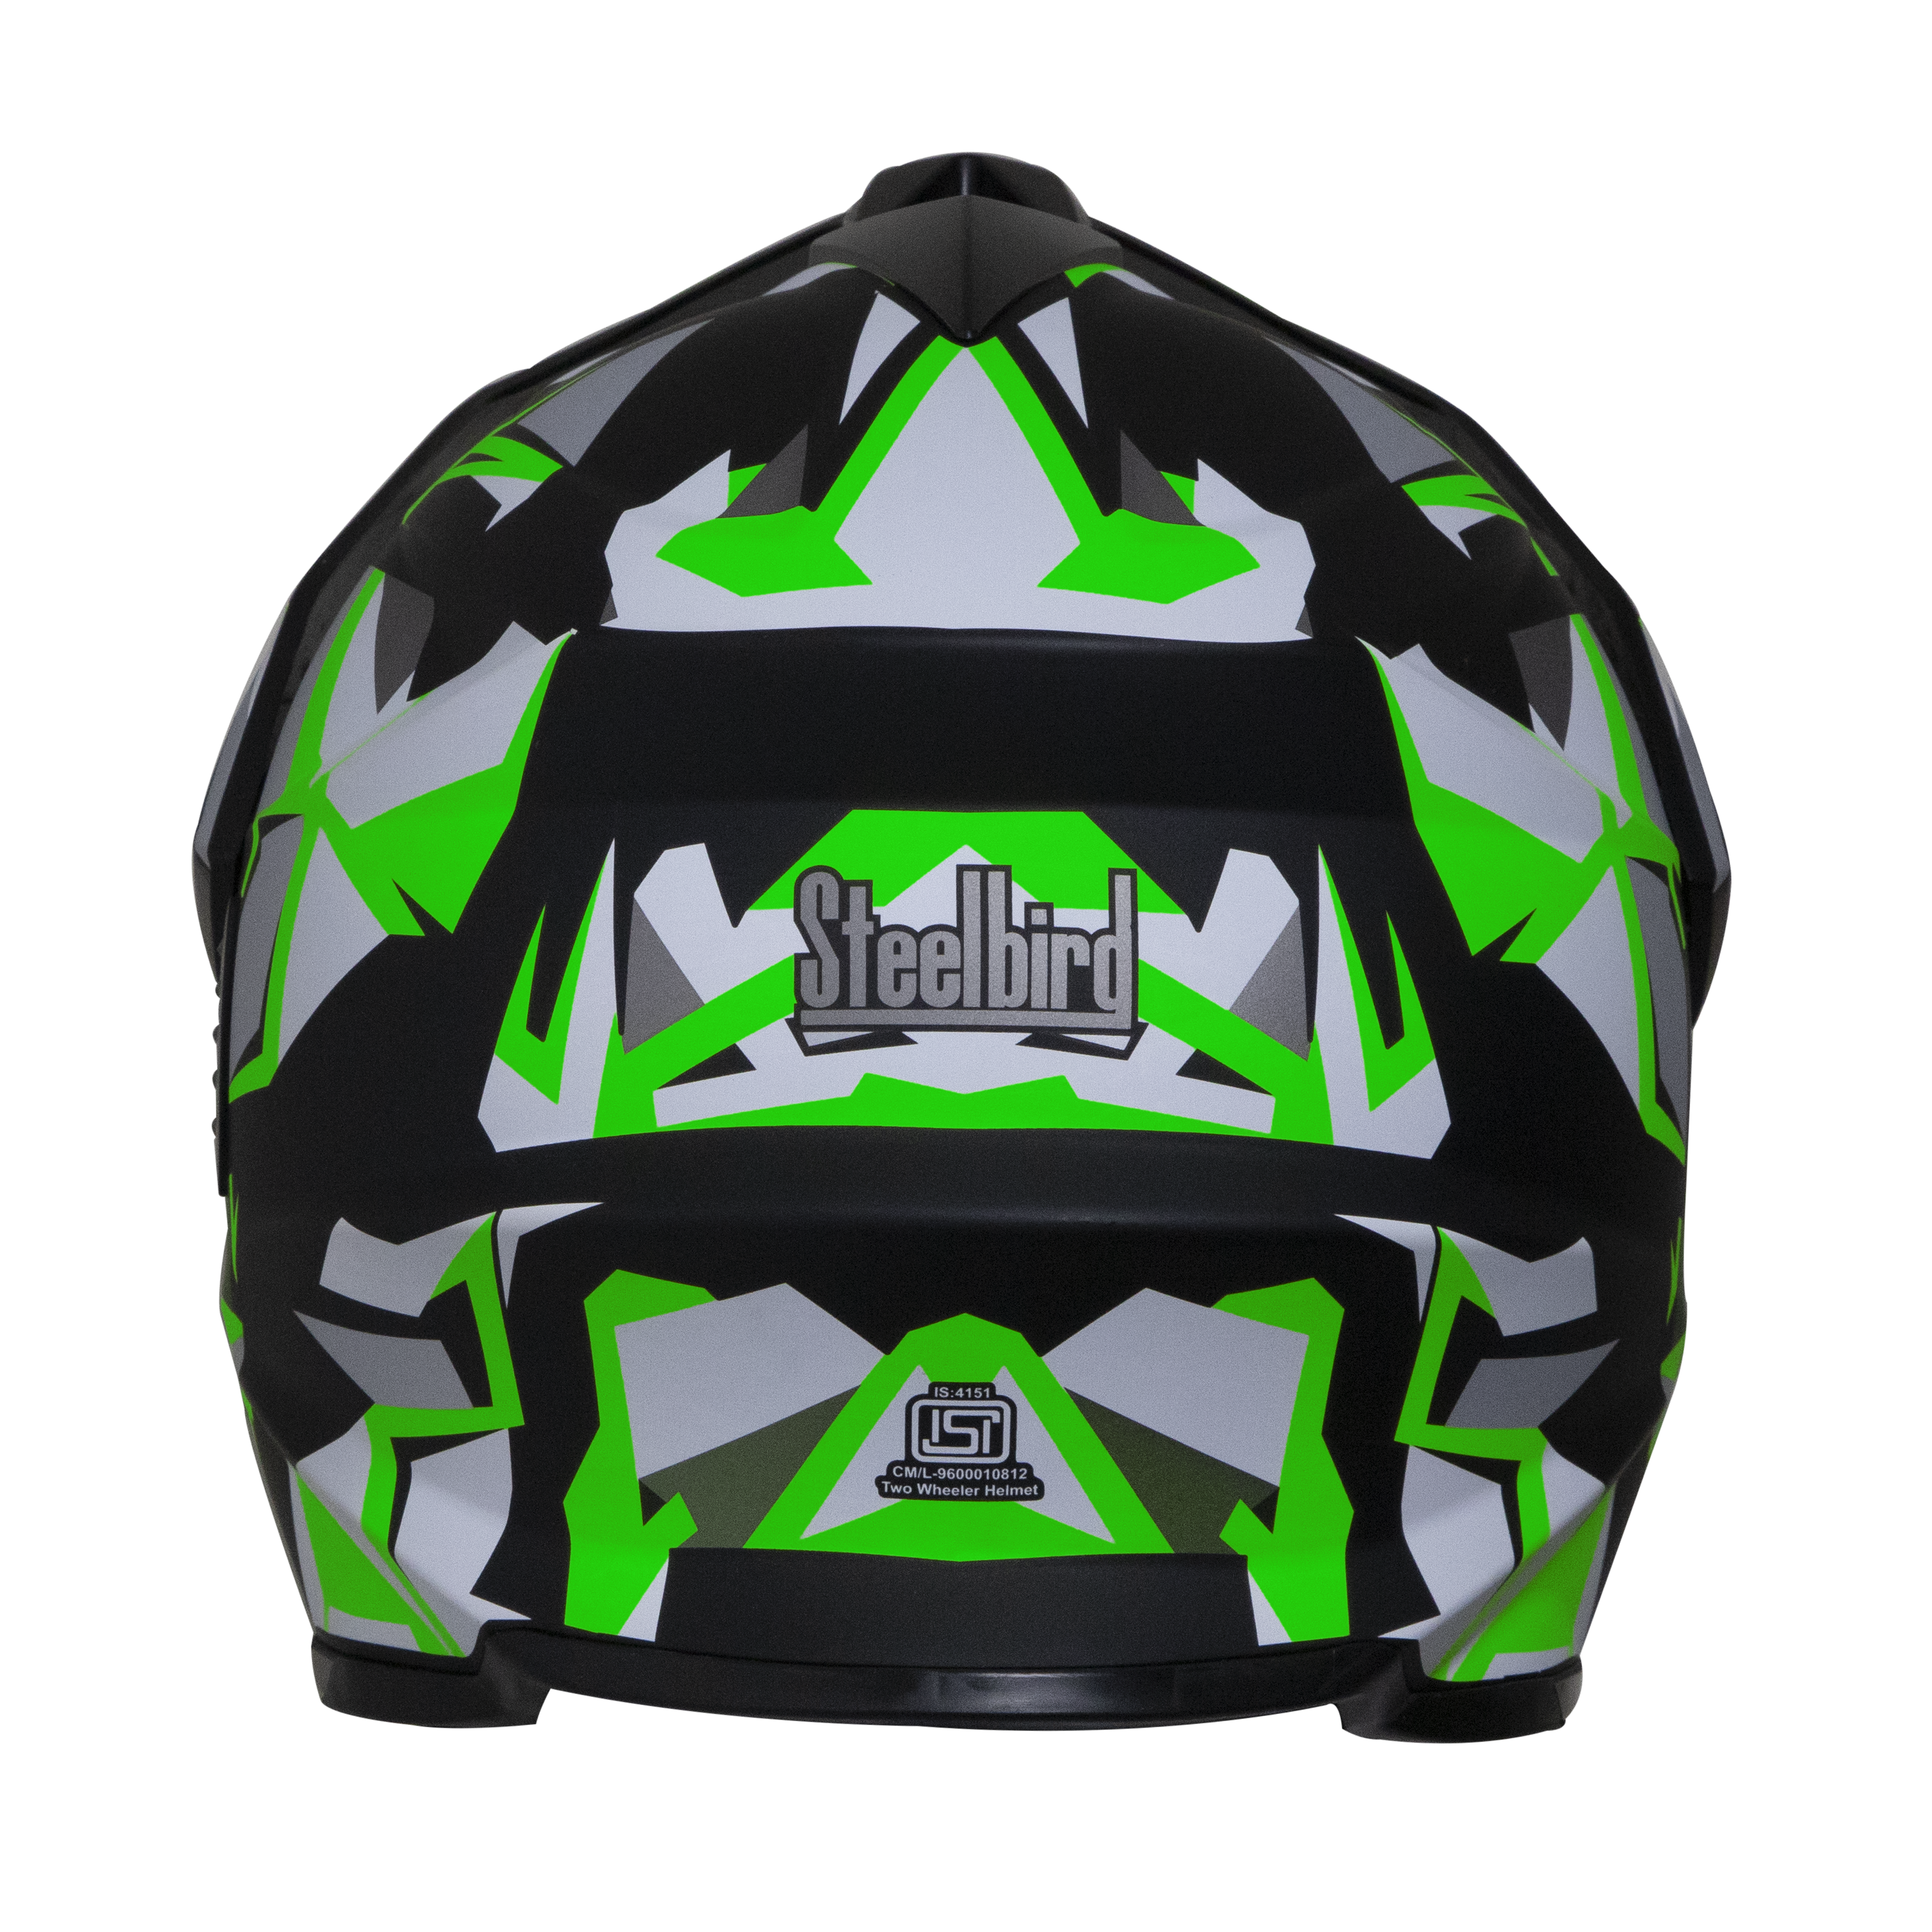 Steelbird Off Road Bang KTN ISI Certified ABS Material Shell Motocross Helmet (Matt Black Green With Clear Visor)